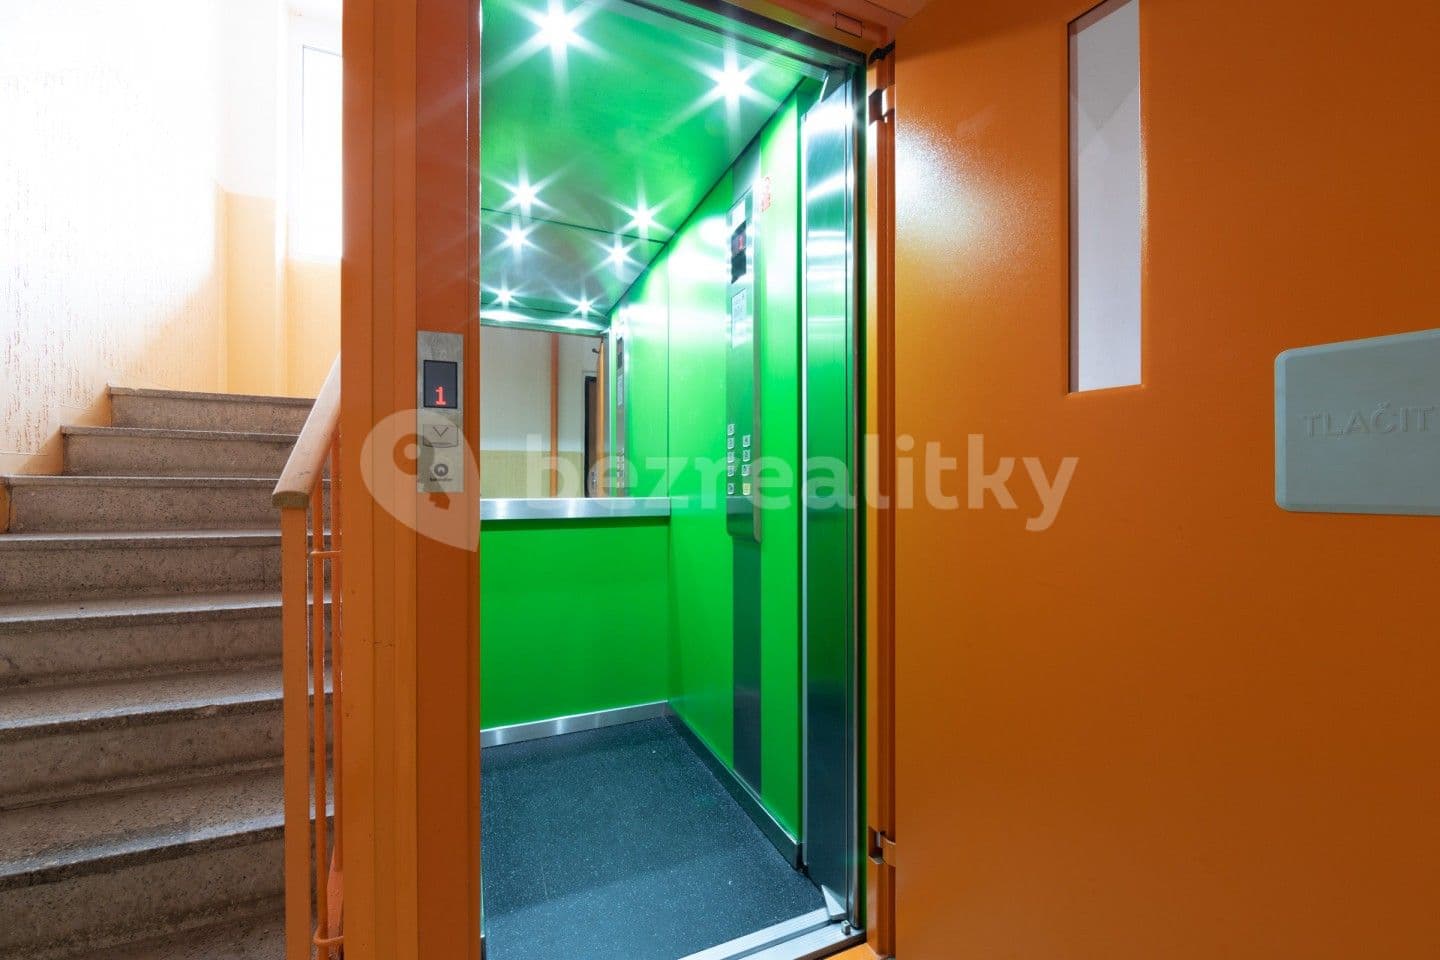 Predaj bytu 2-izbový 62 m², třída Dukelských hrdinů, Jáchymov, Karlovarský kraj